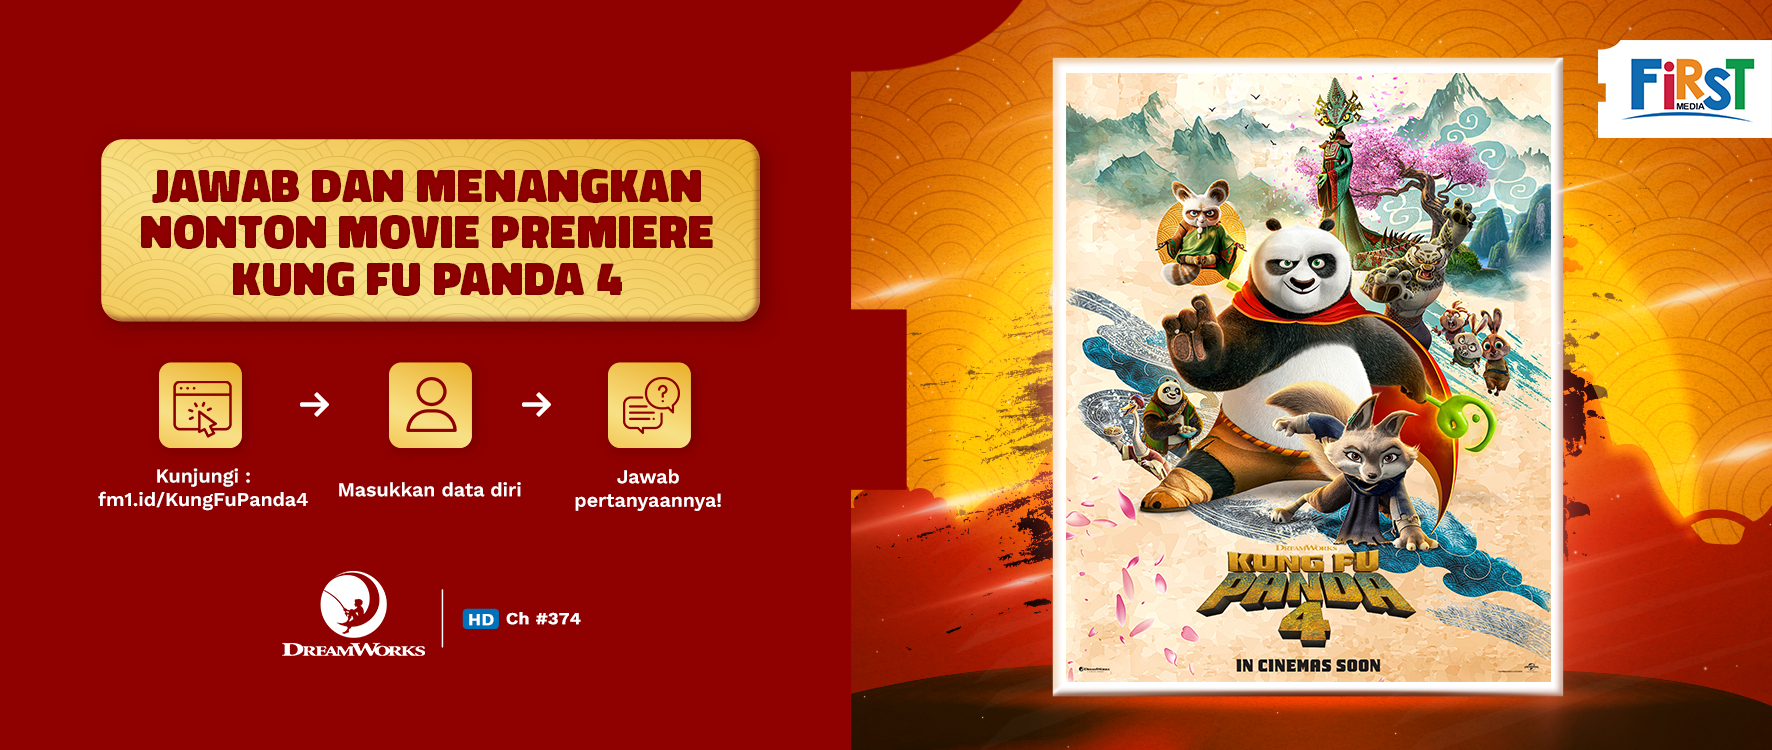 Kung Fu Panda 4 Movie Premiere Giveaway